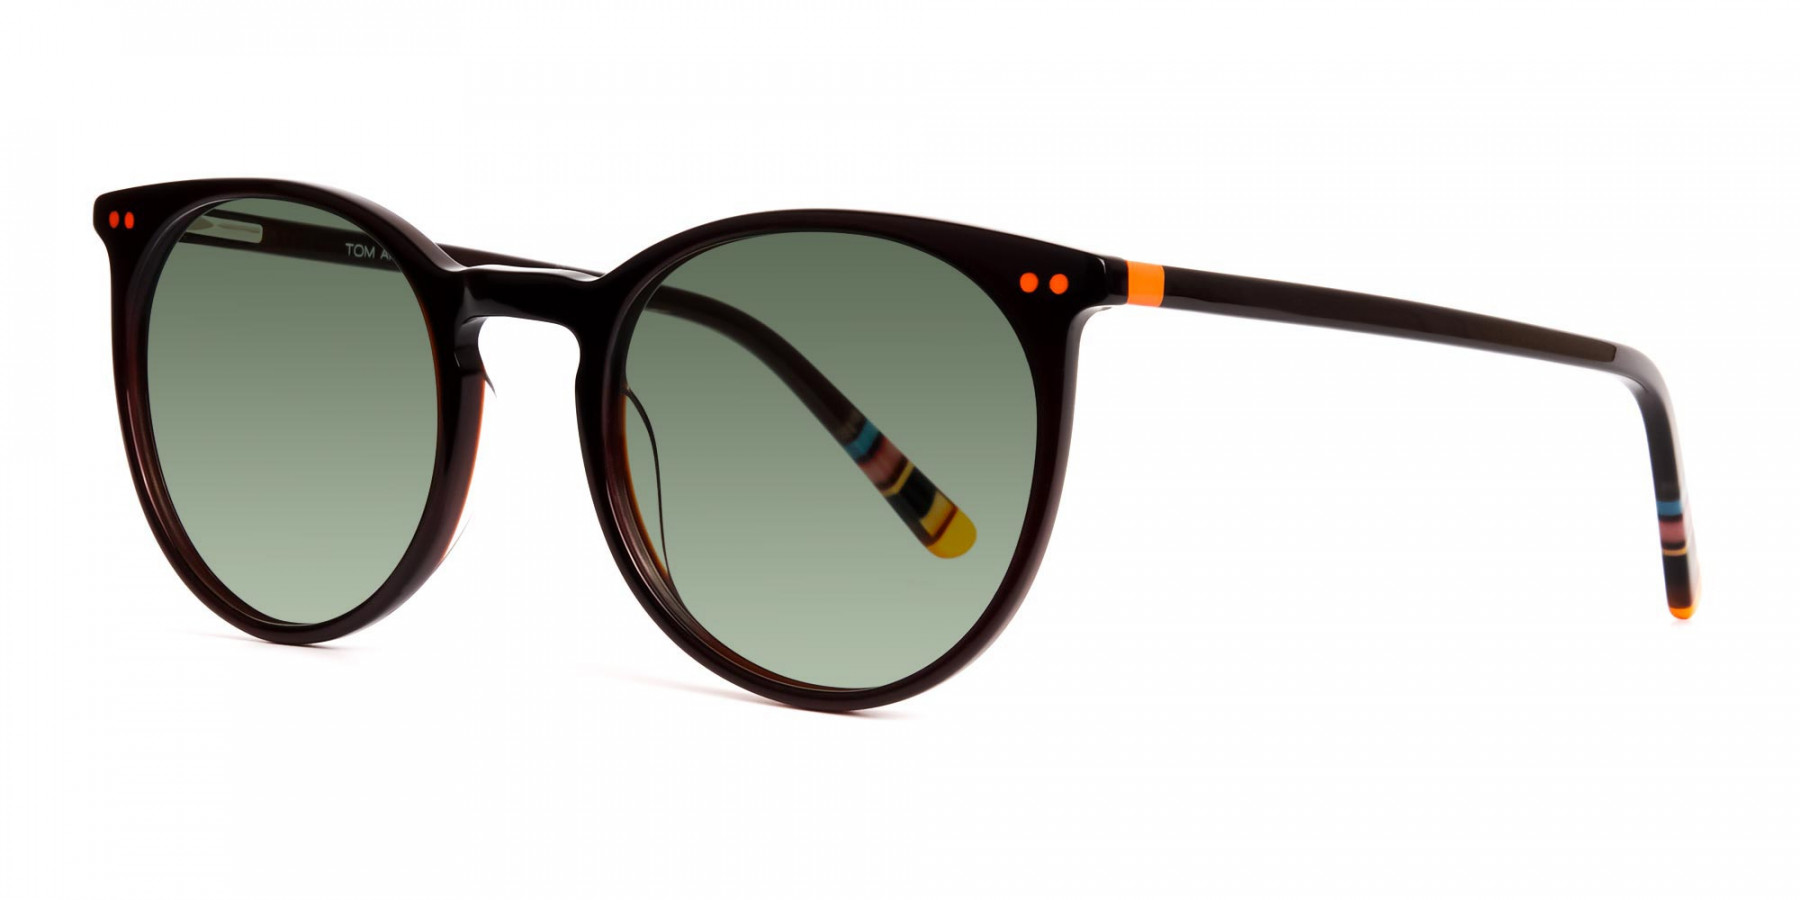 dark-brown-round-green-tinted-sunglasses-frames-1